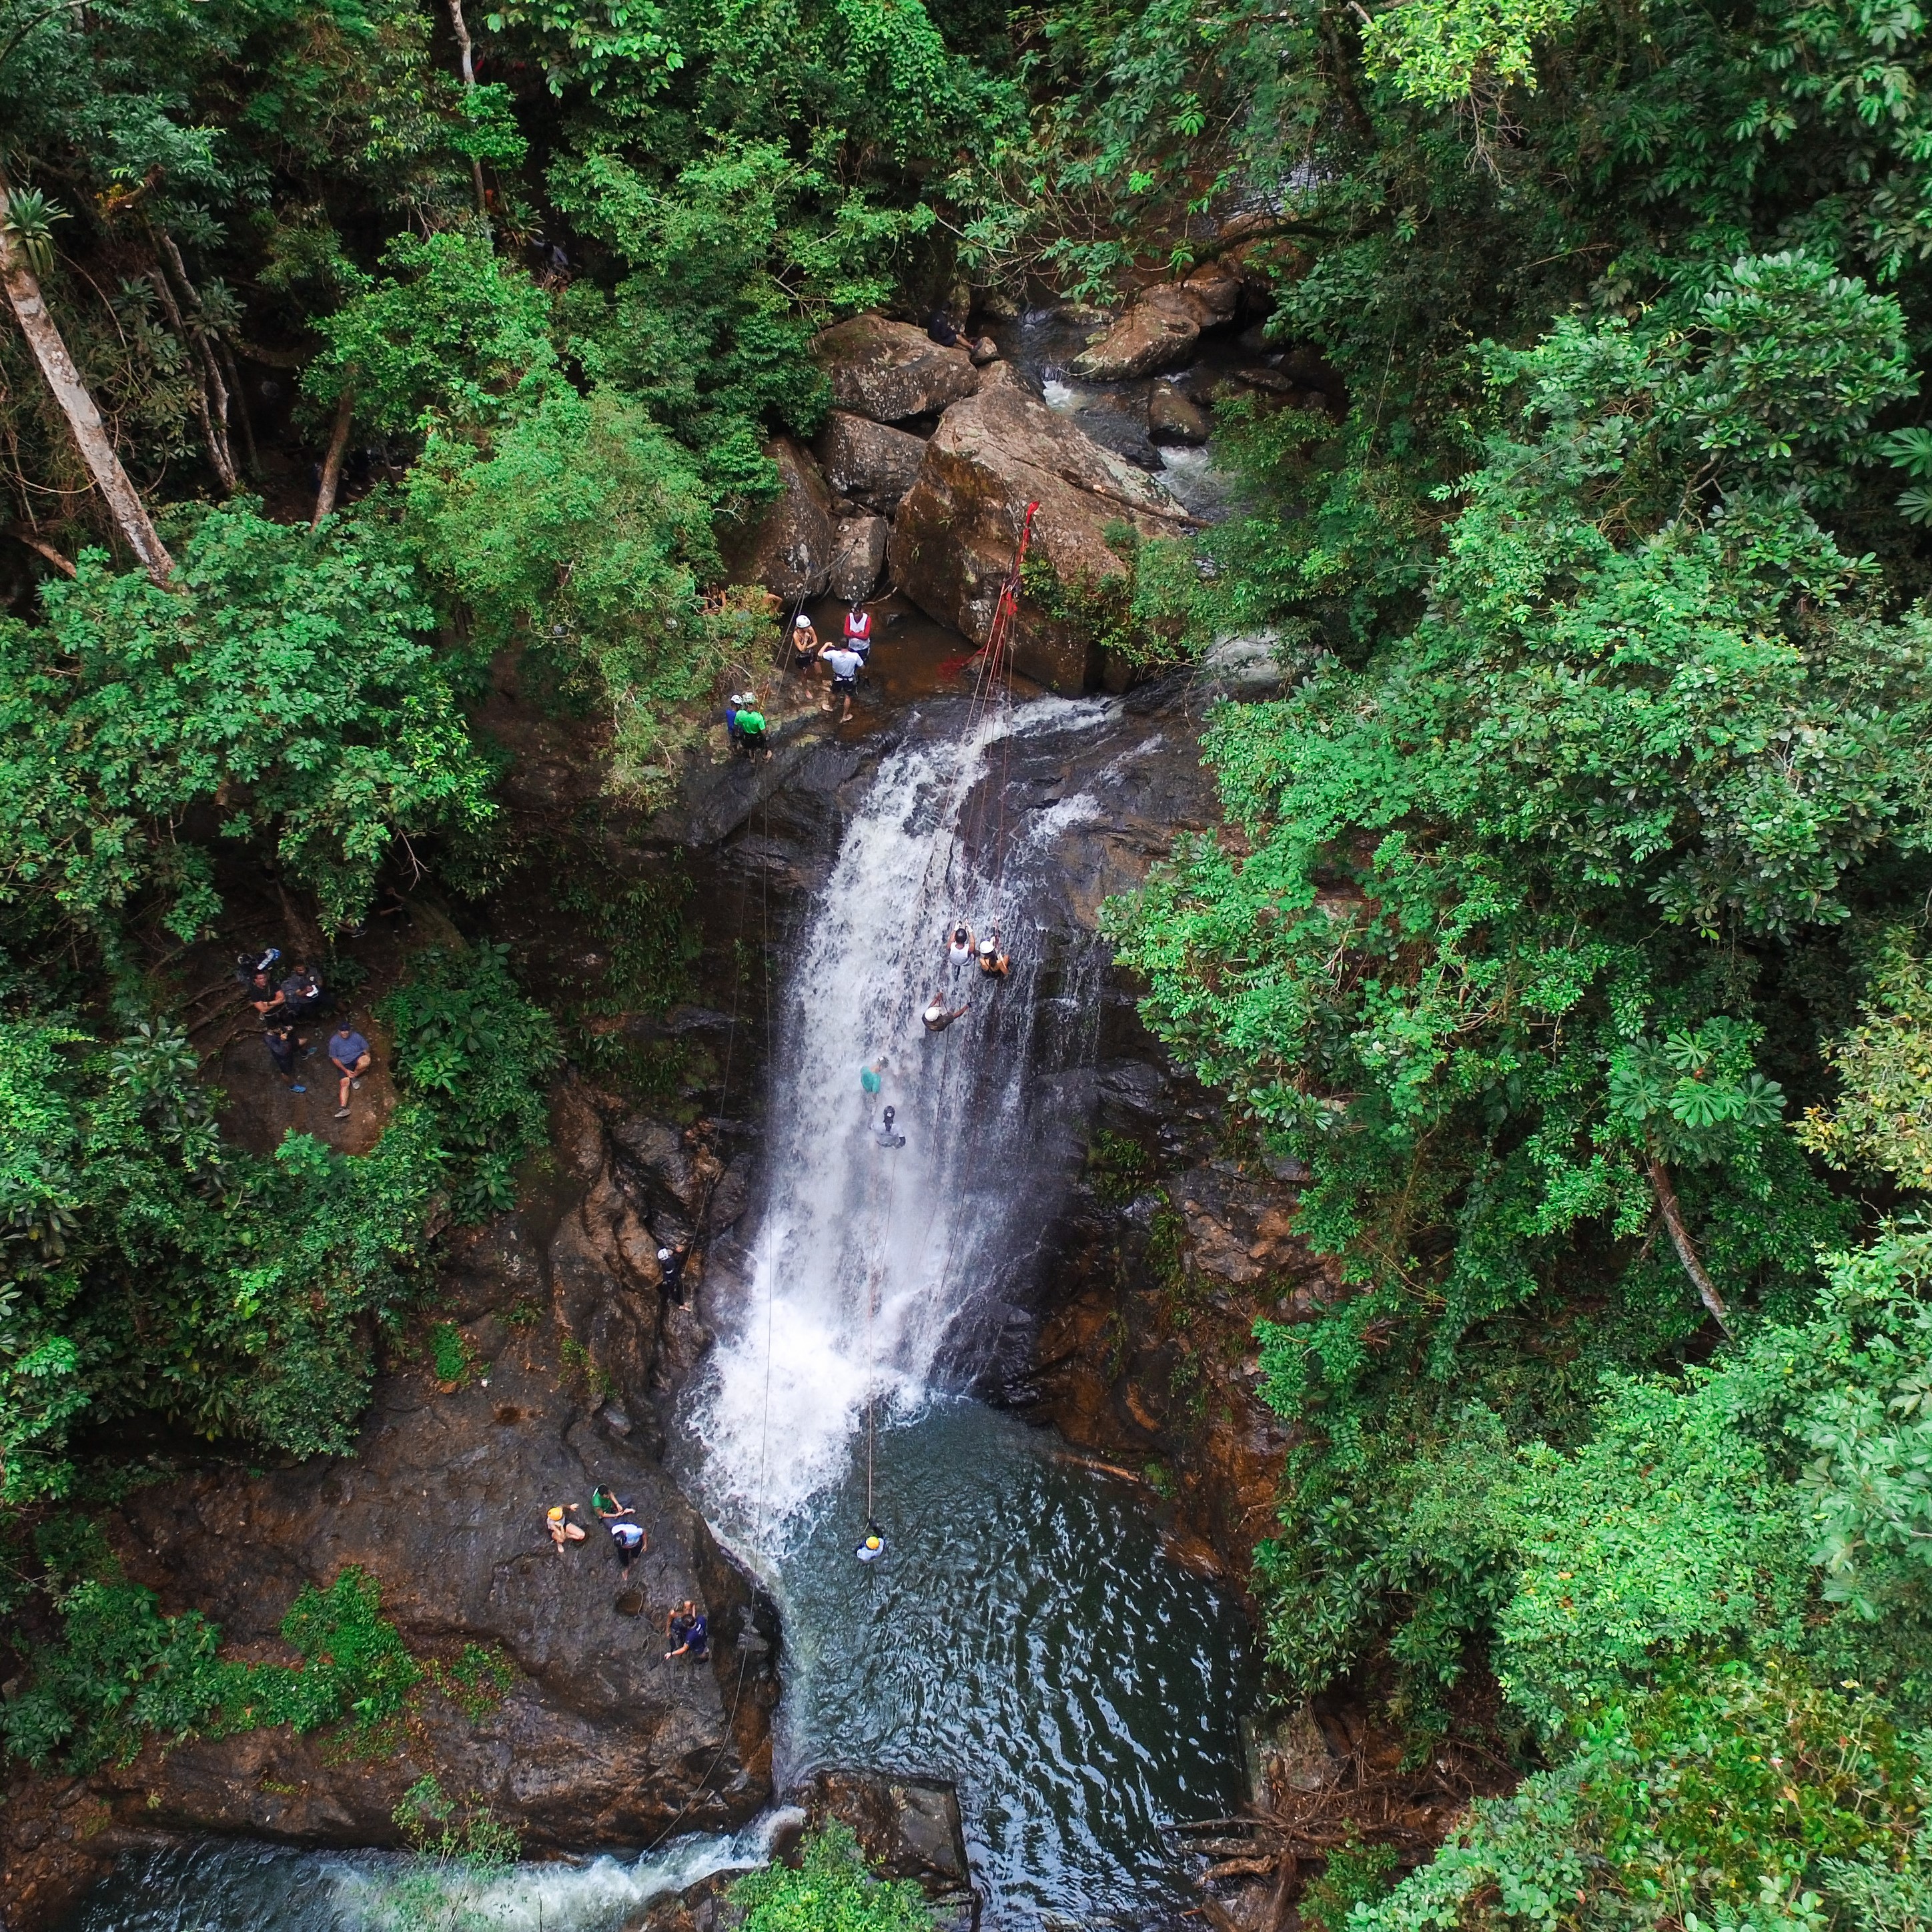 Rapel na Cachoeira do Mendanha